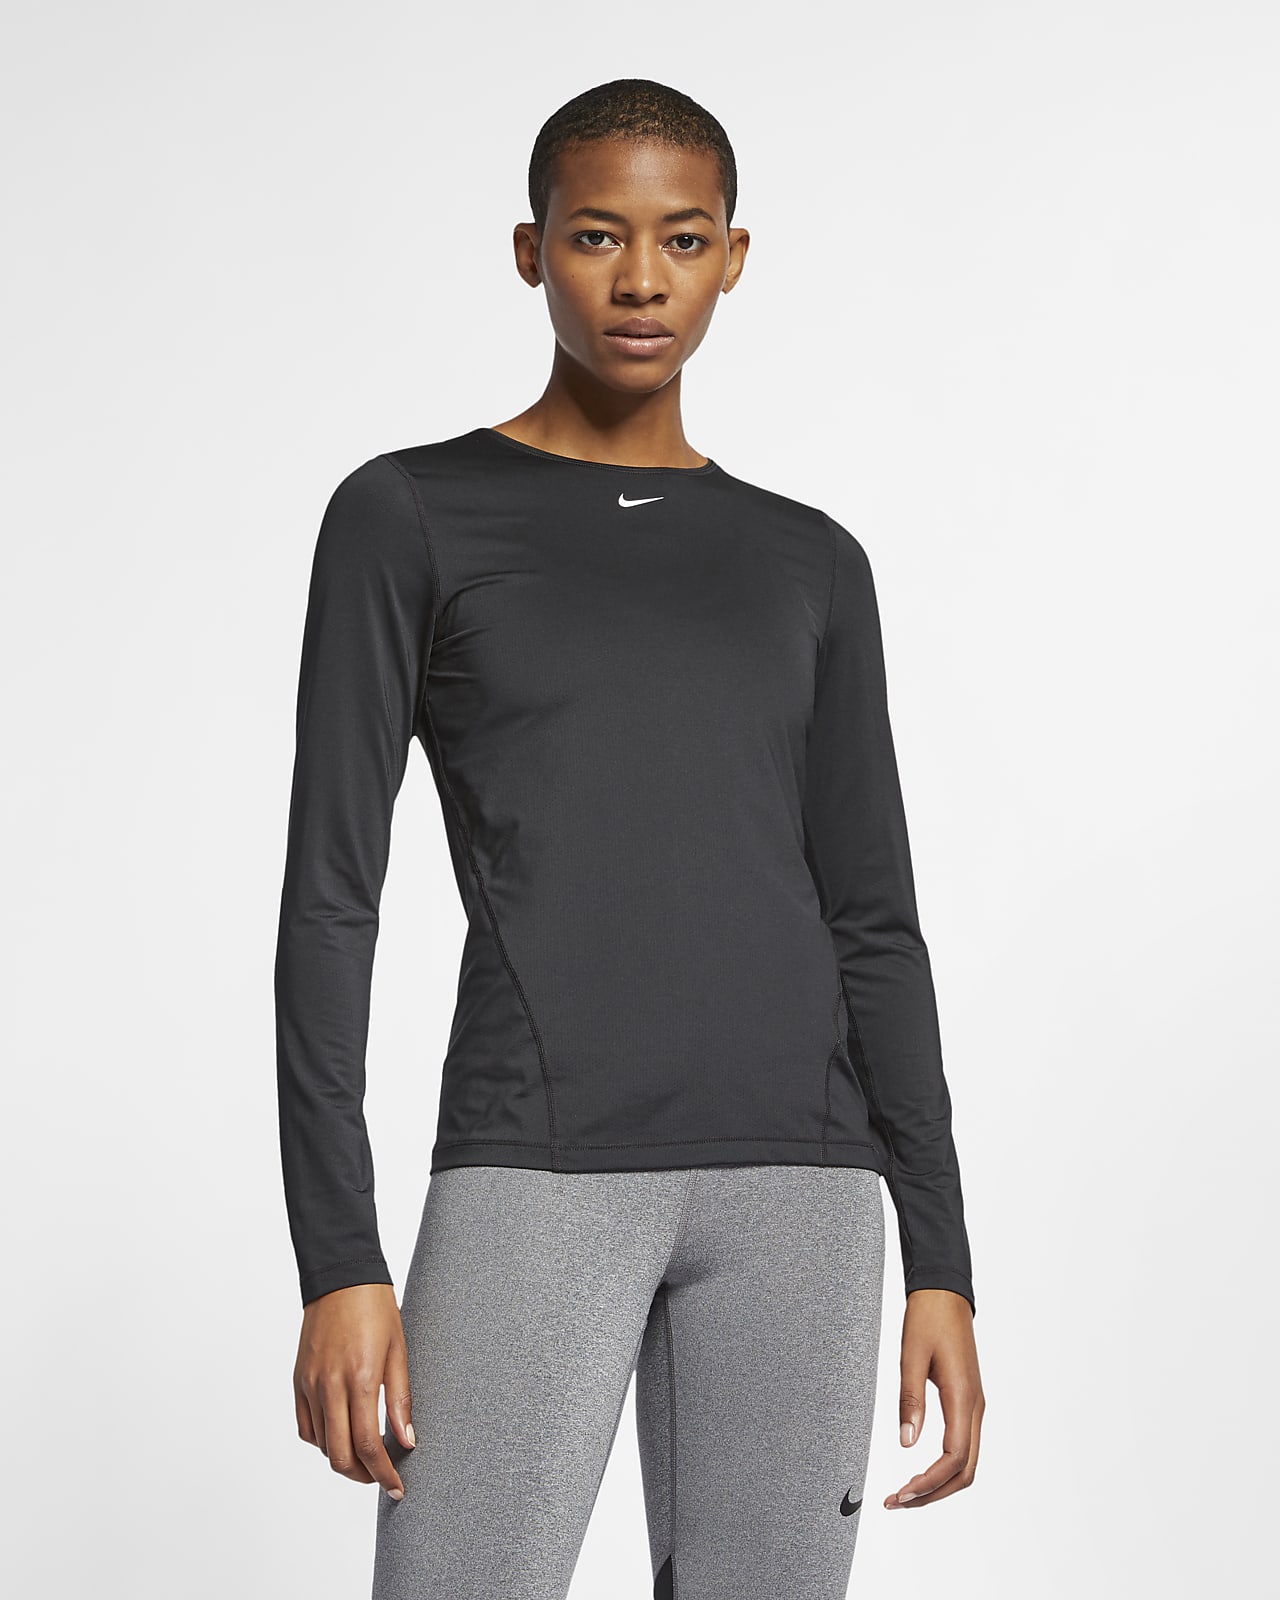 Nike Pro Women's Long-Sleeve Mesh Top. Nike EG